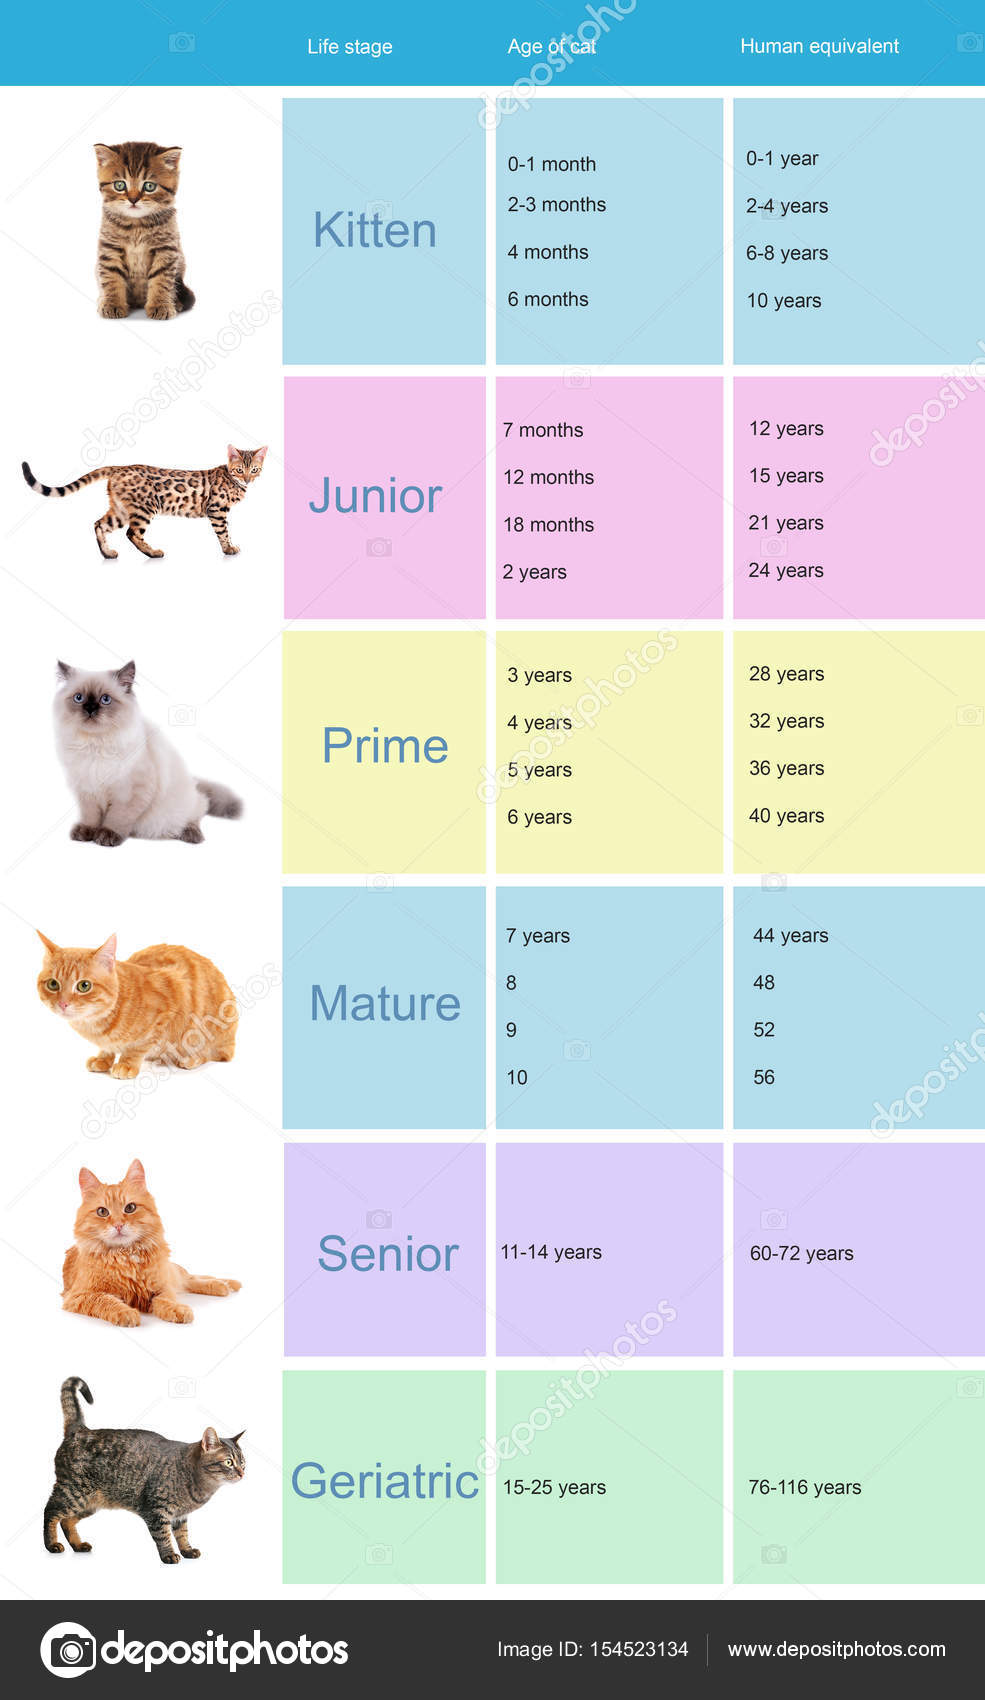 Healthy Cat Chart